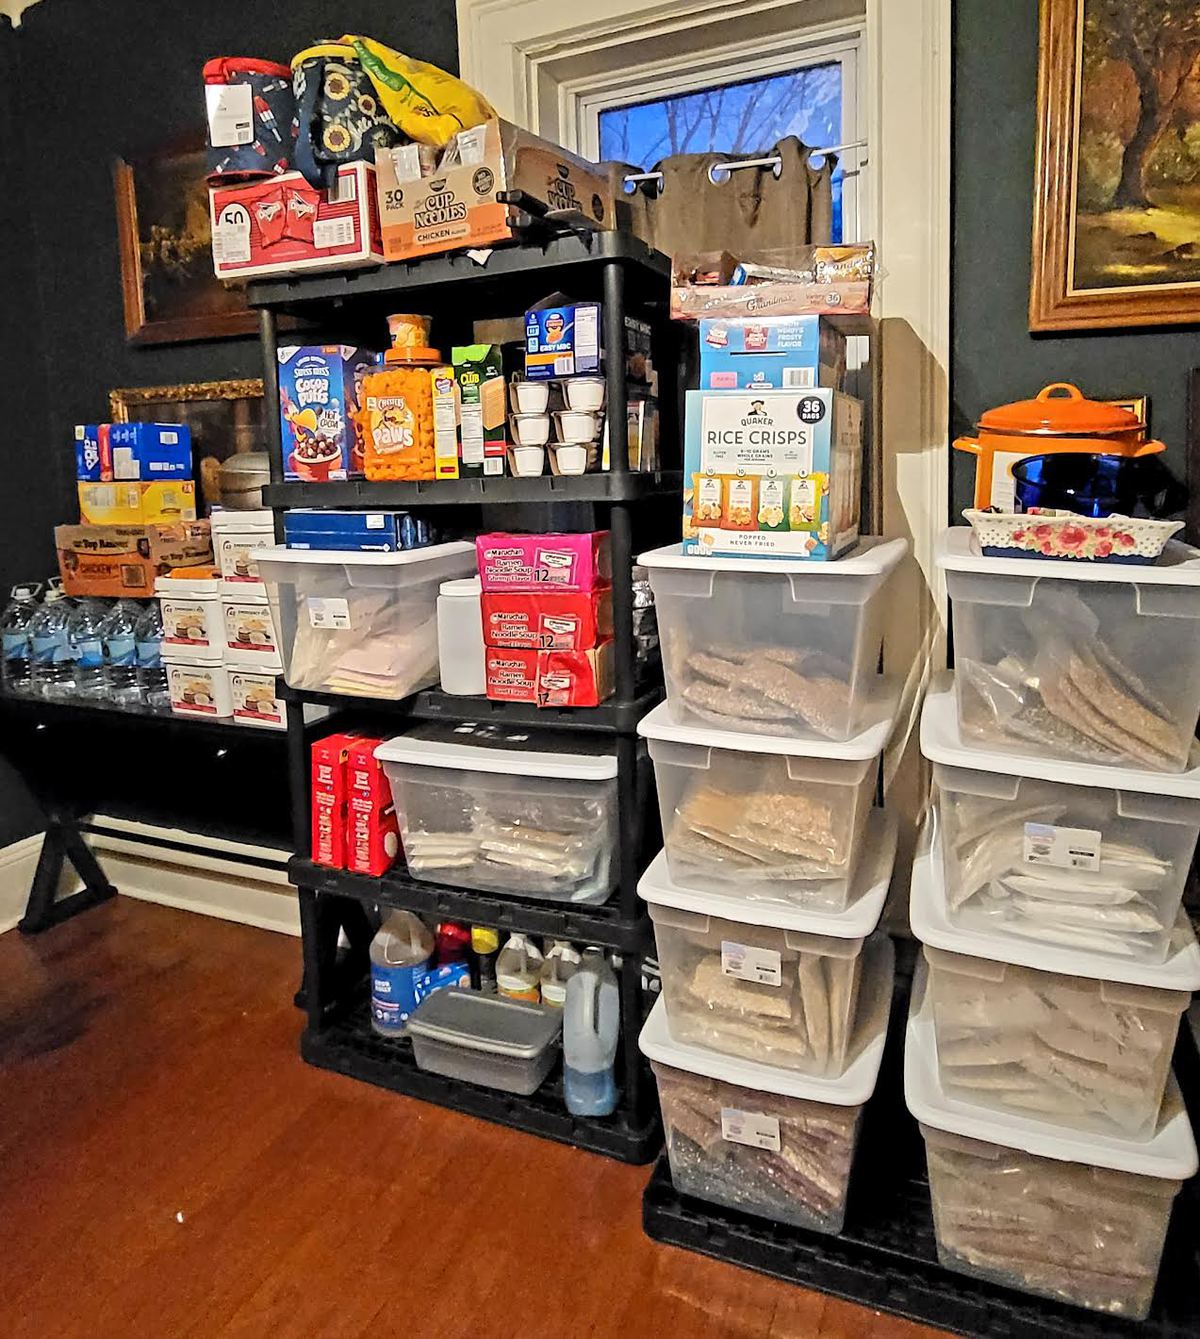 inside the doomsday prepper bunker, where she has stockpile $90,000 worth of food.